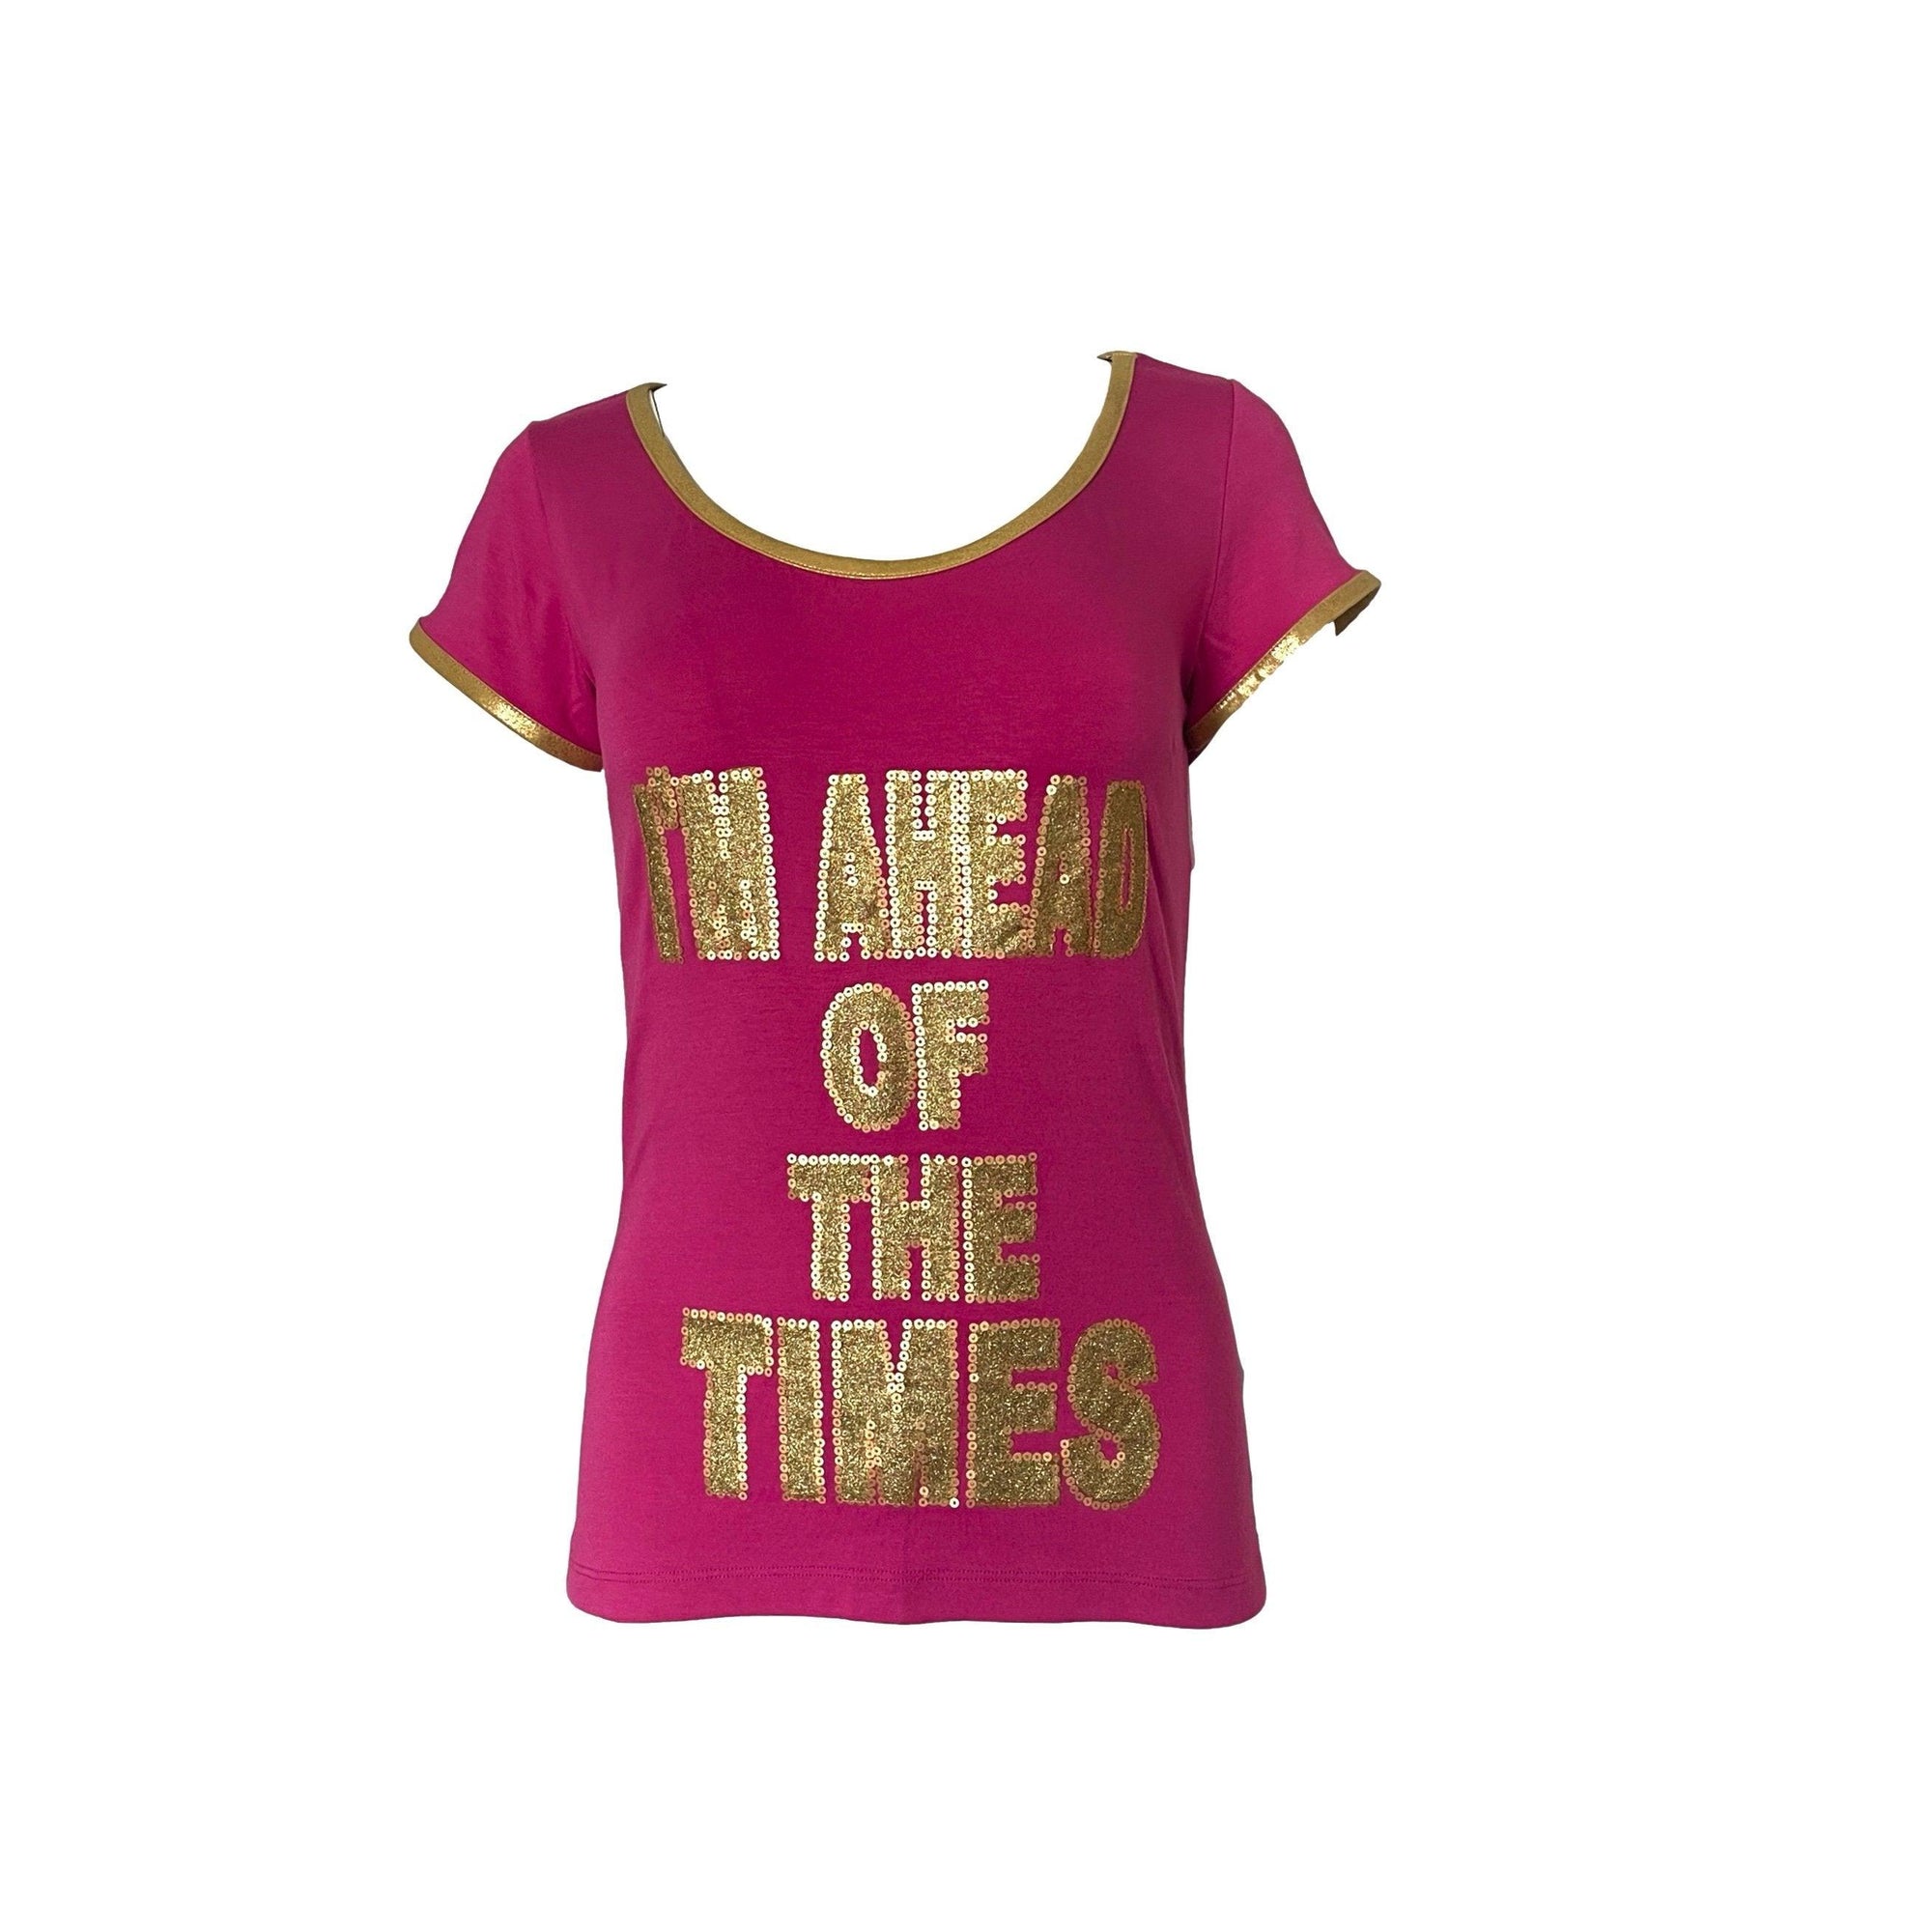 Dolce & Gabbana Pink Sequin Graphic T-Shirt - Apparel